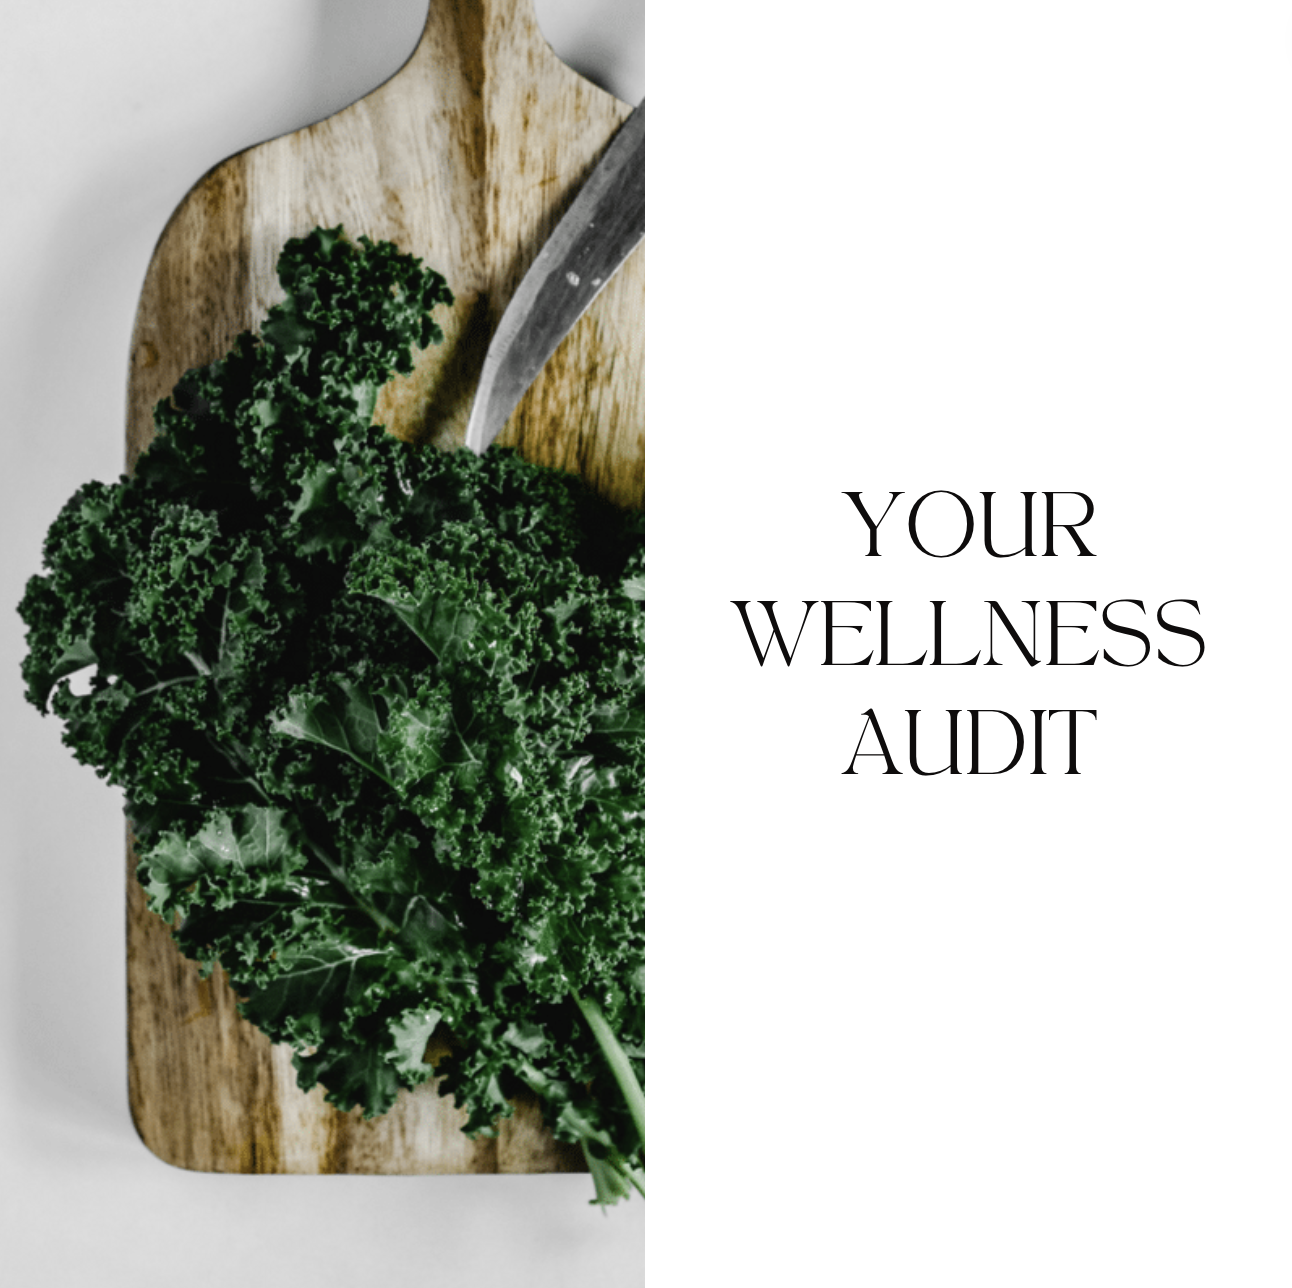 Wellness Audit. https://www.info-on-high-blood-pressure.com/wellness-routine.html